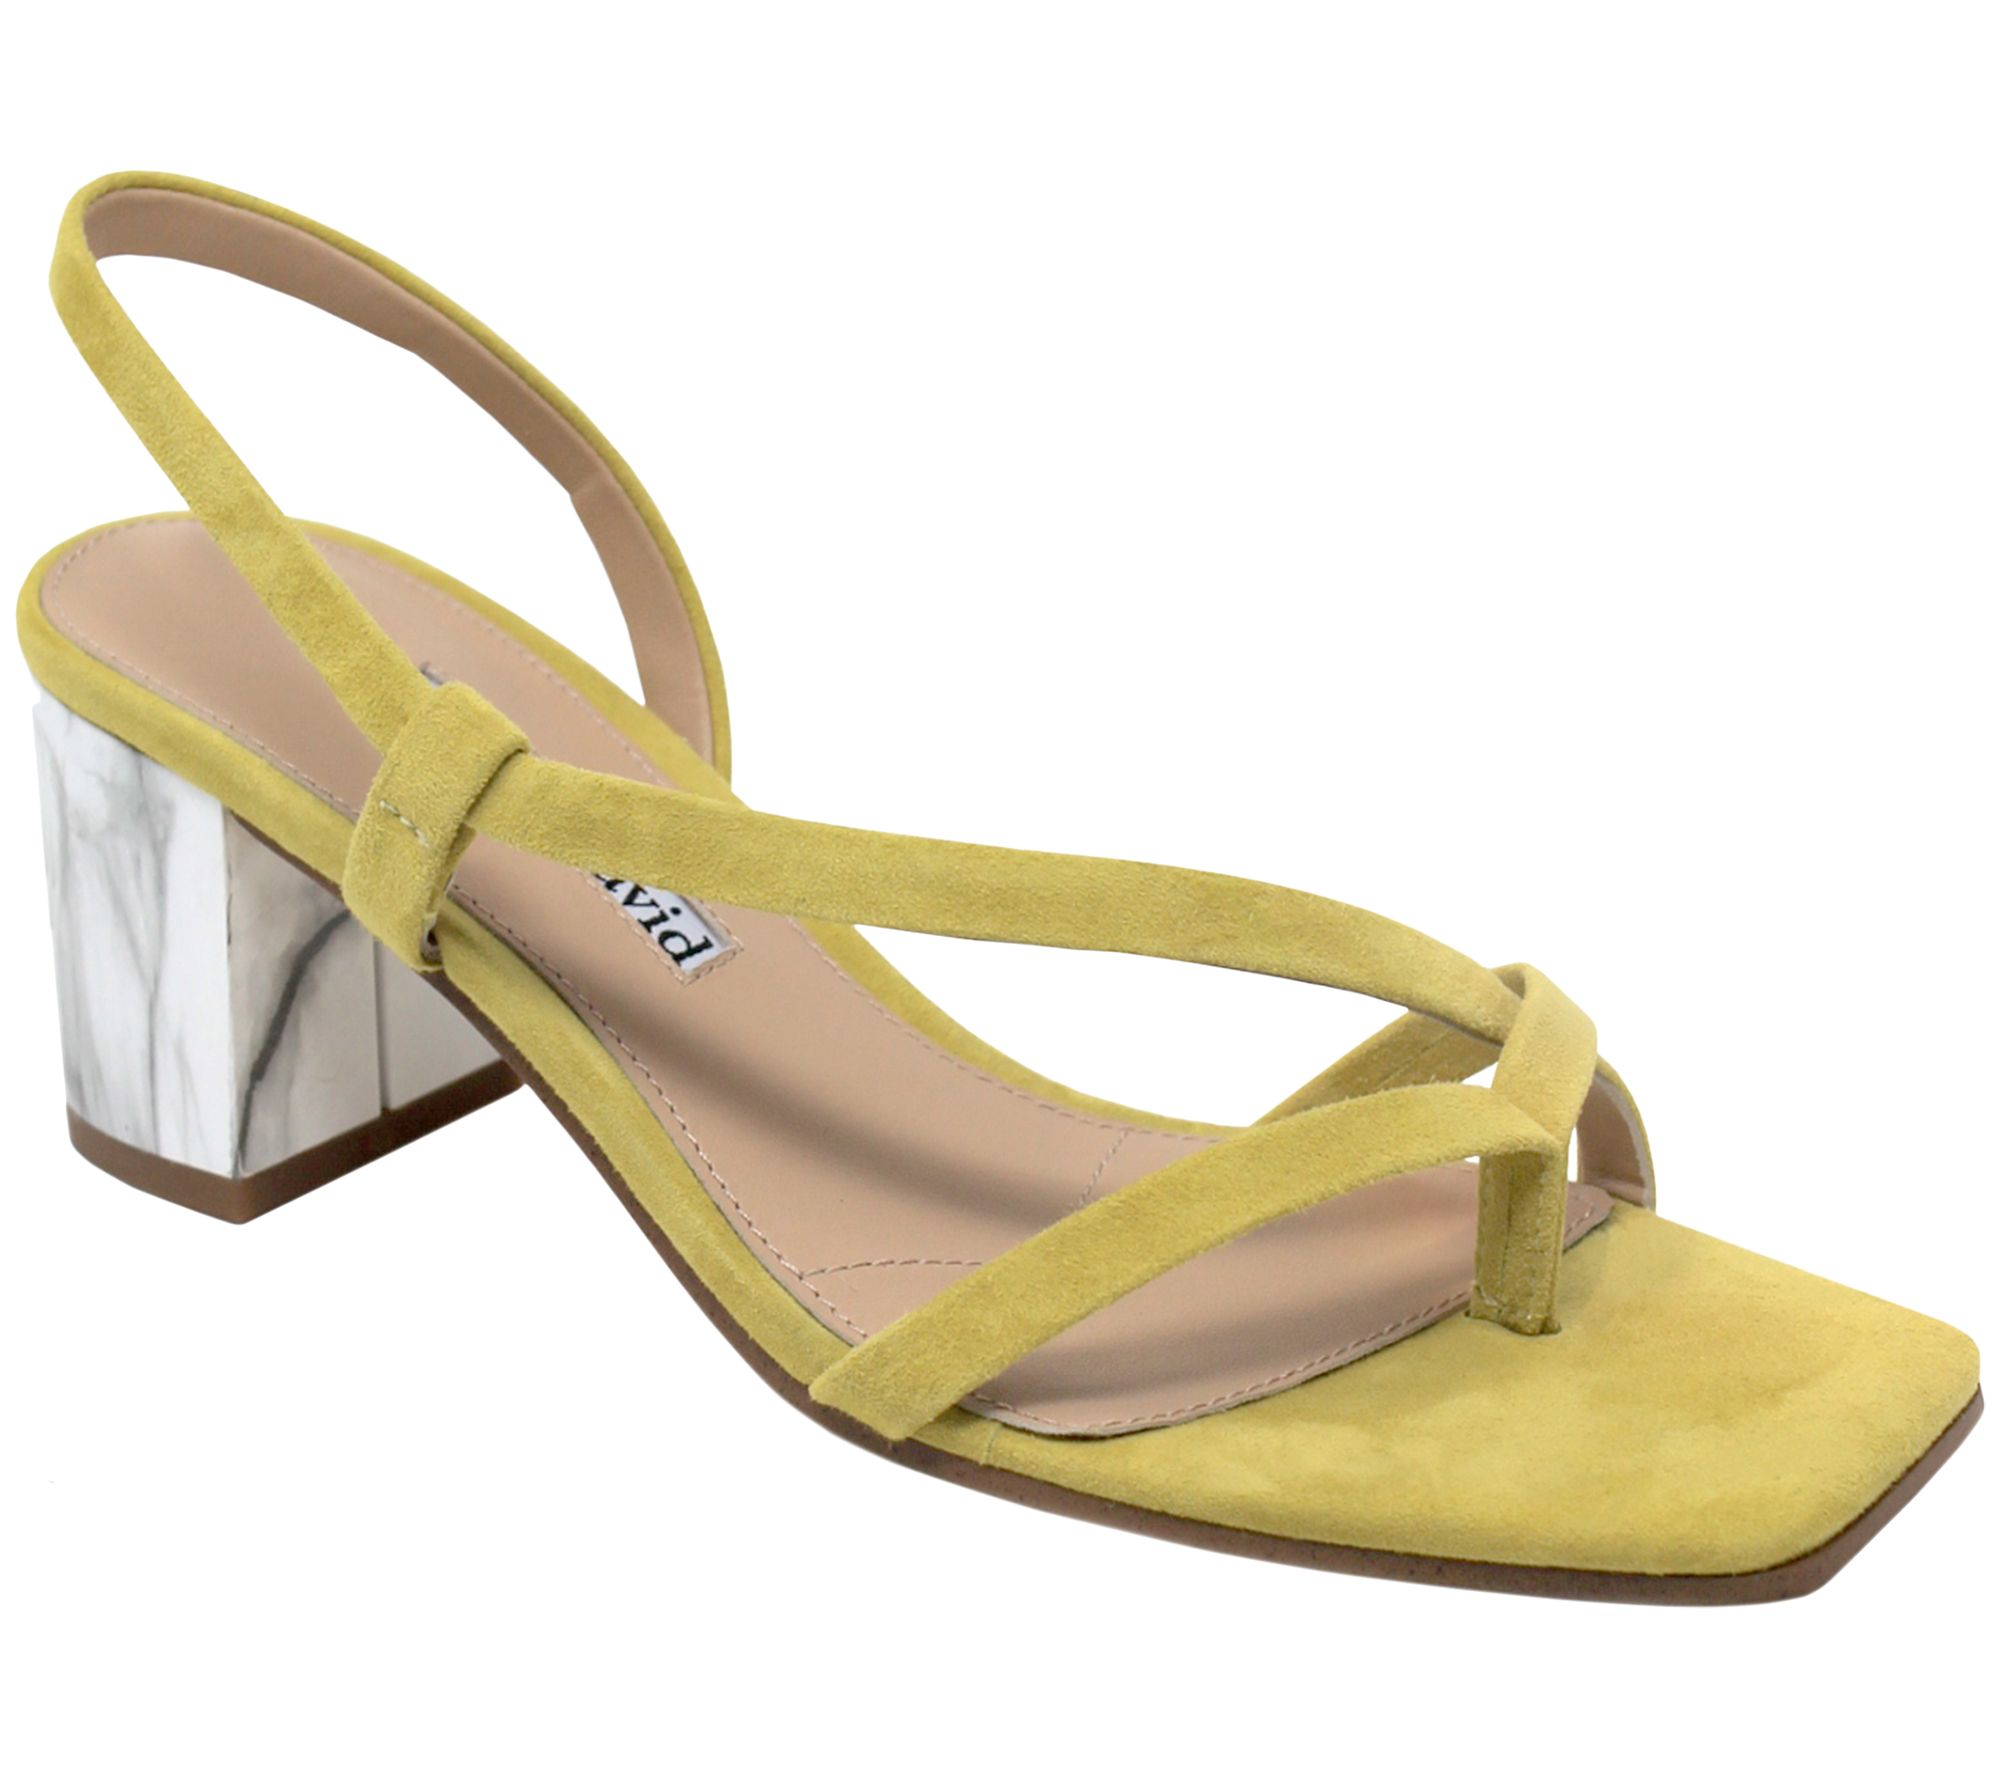 Charles David Leather Asymmetrical Low Heel Sandals - Clay - QVC.com